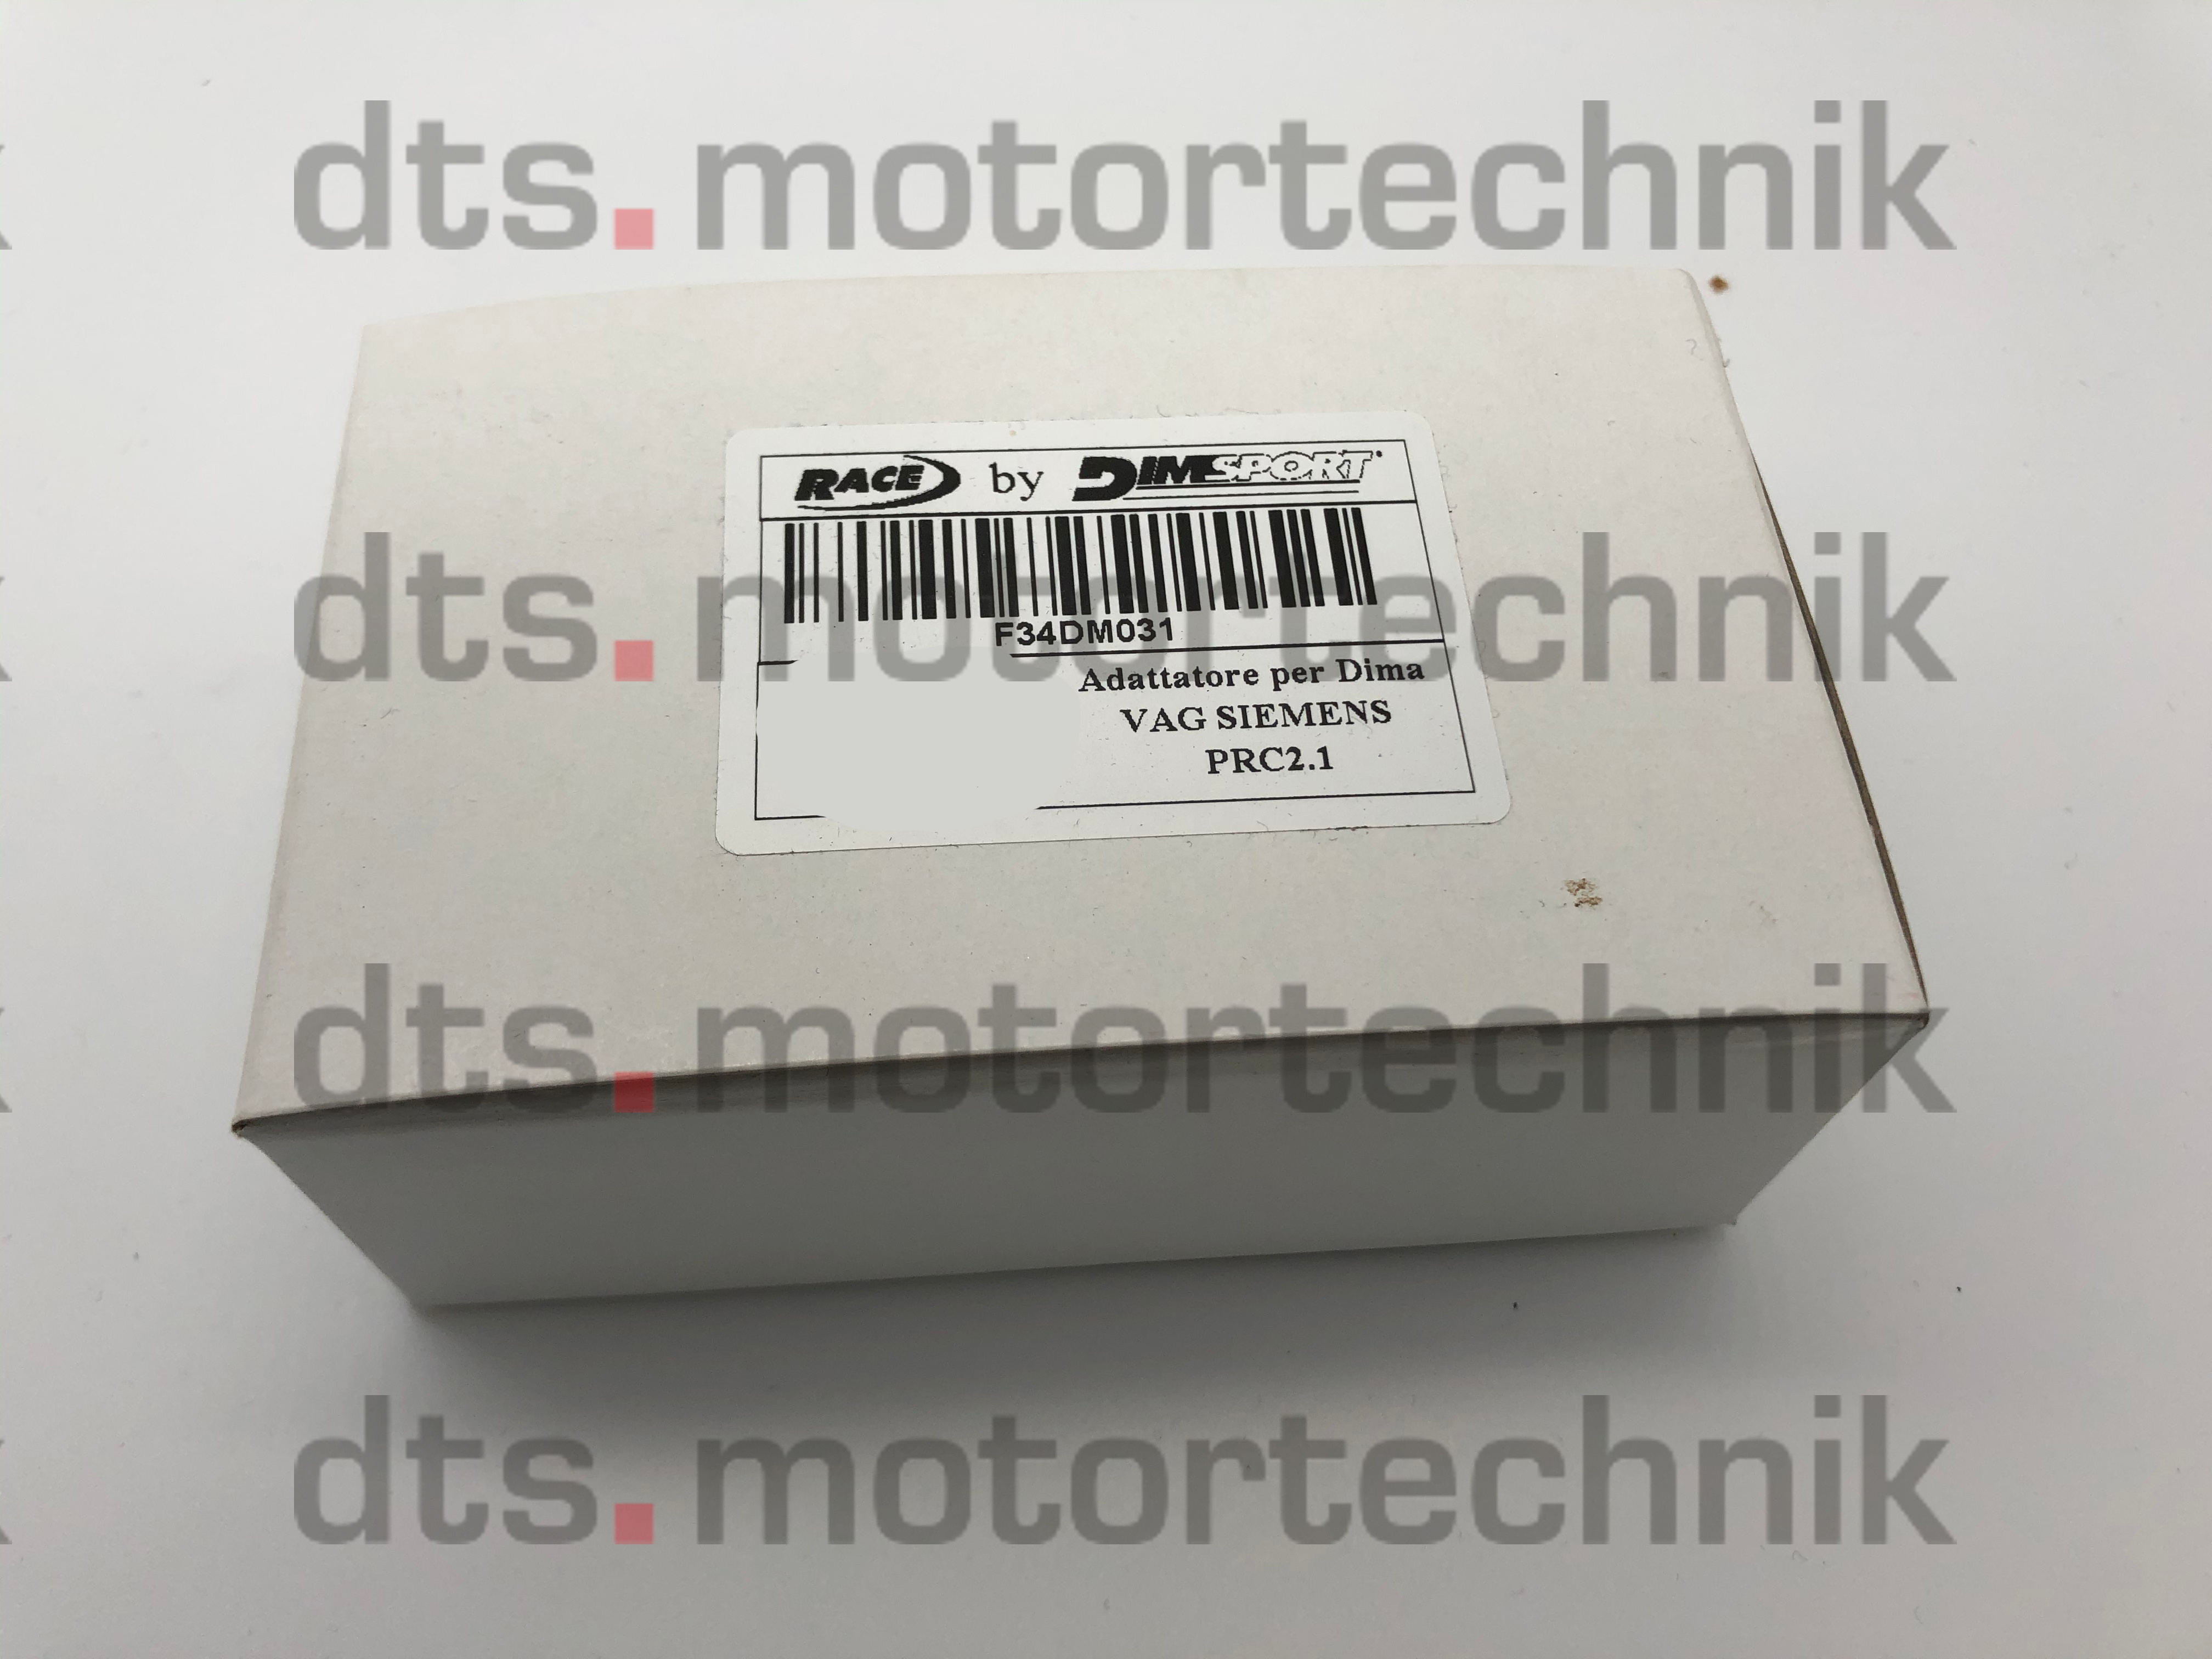 Infineon tricore (TF003) & ST Microelectronics (TF002) CPUs Terminaladapter-Komplettsett für CAR/LCV